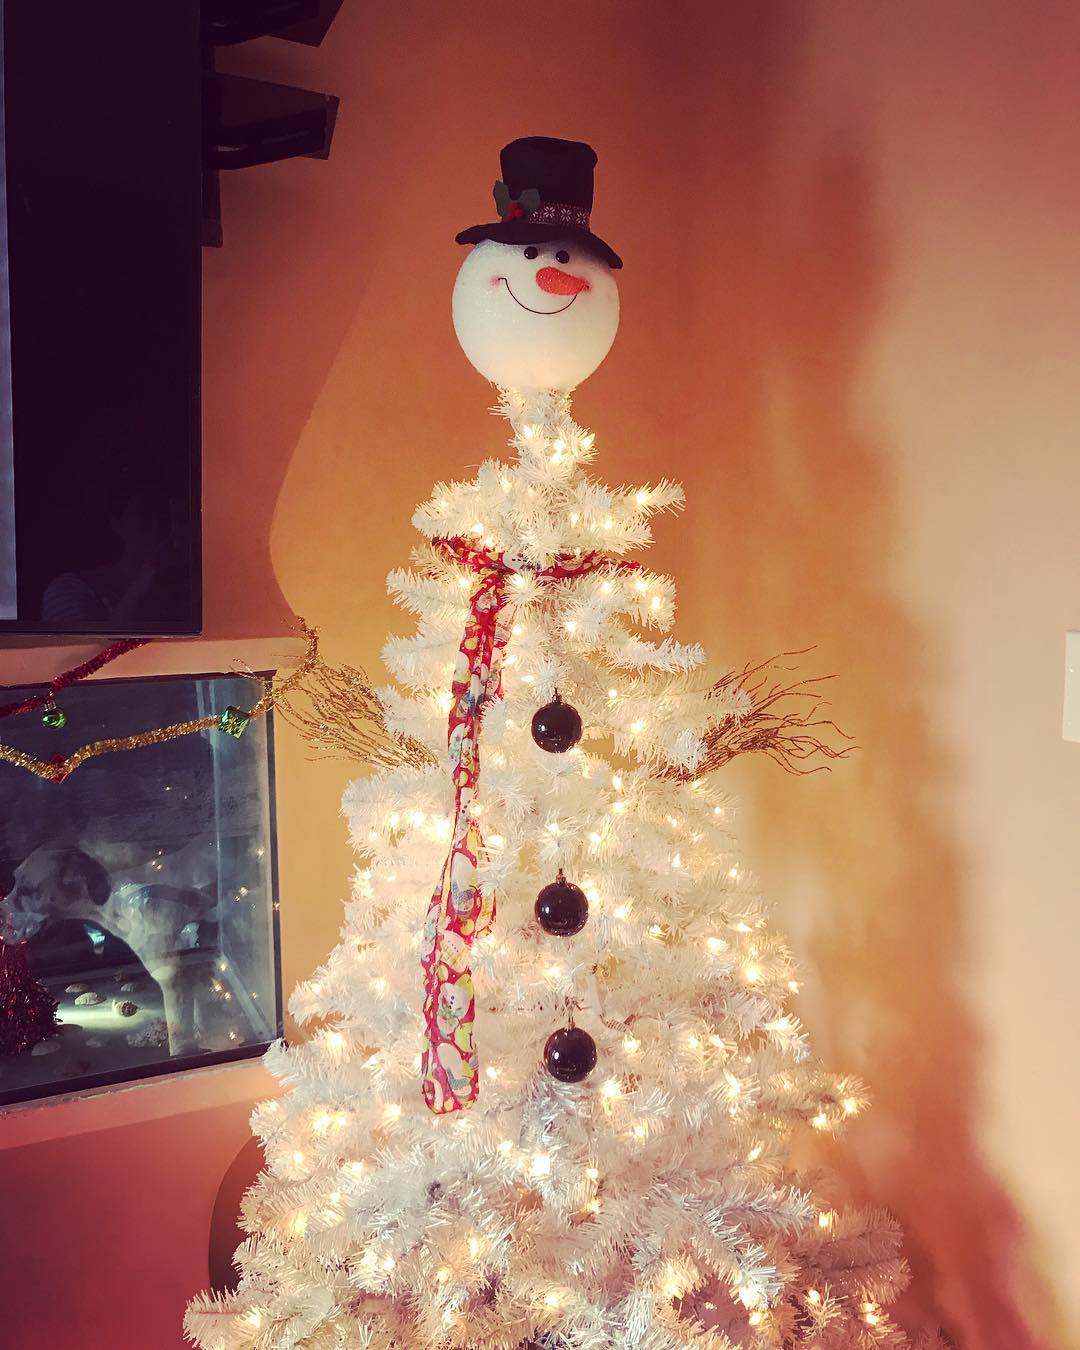 The lazy man’s Christmas tree.